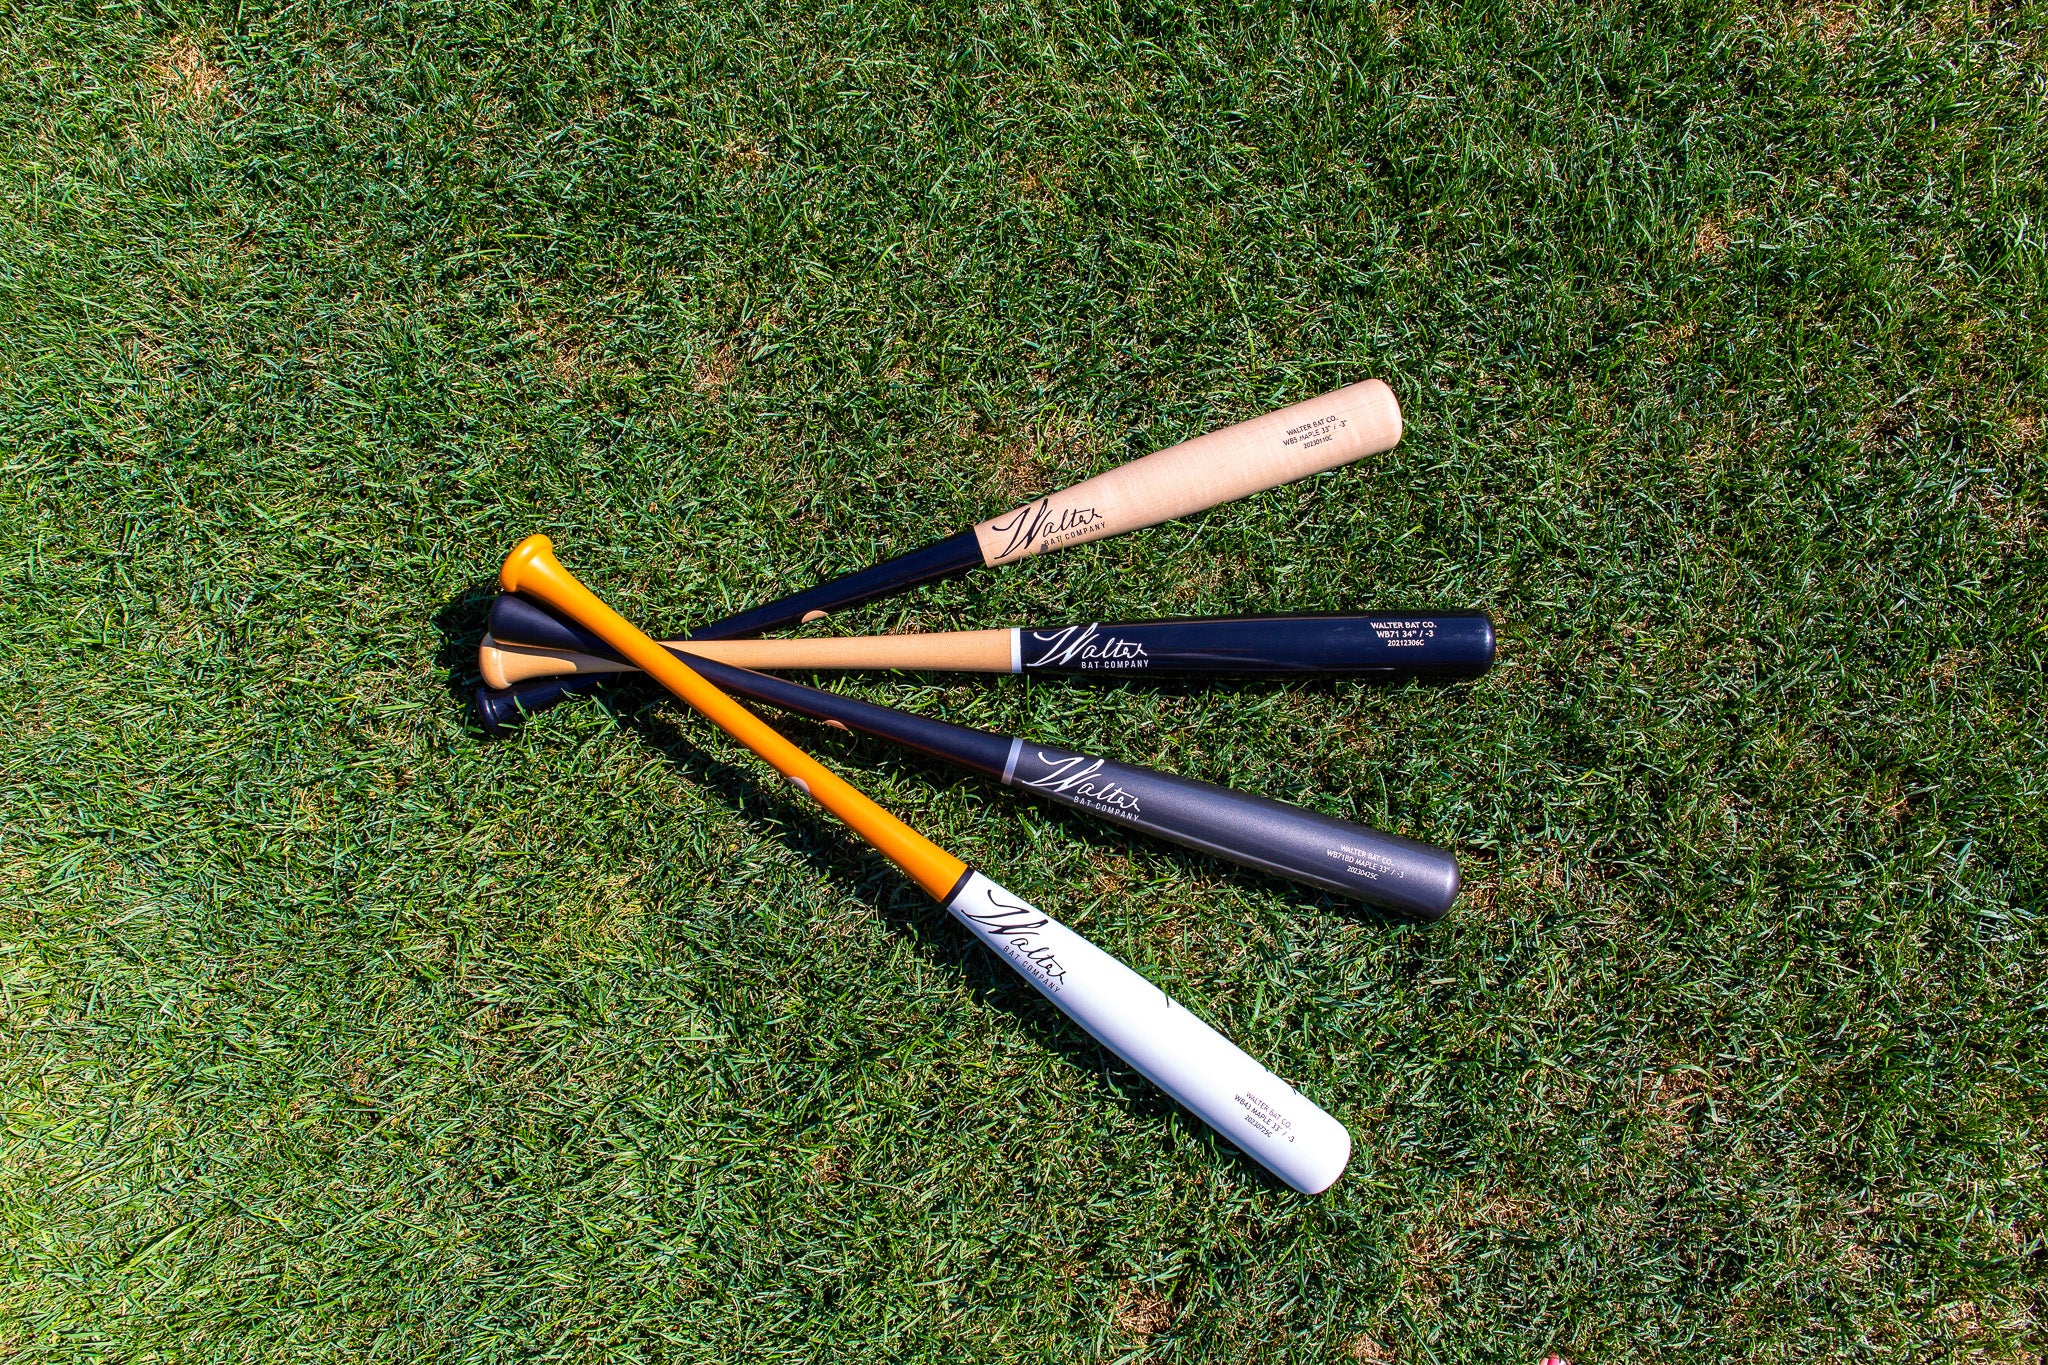 Customizable Wood Pen - carved from broken baseball bats – The Baseball  Seams Company